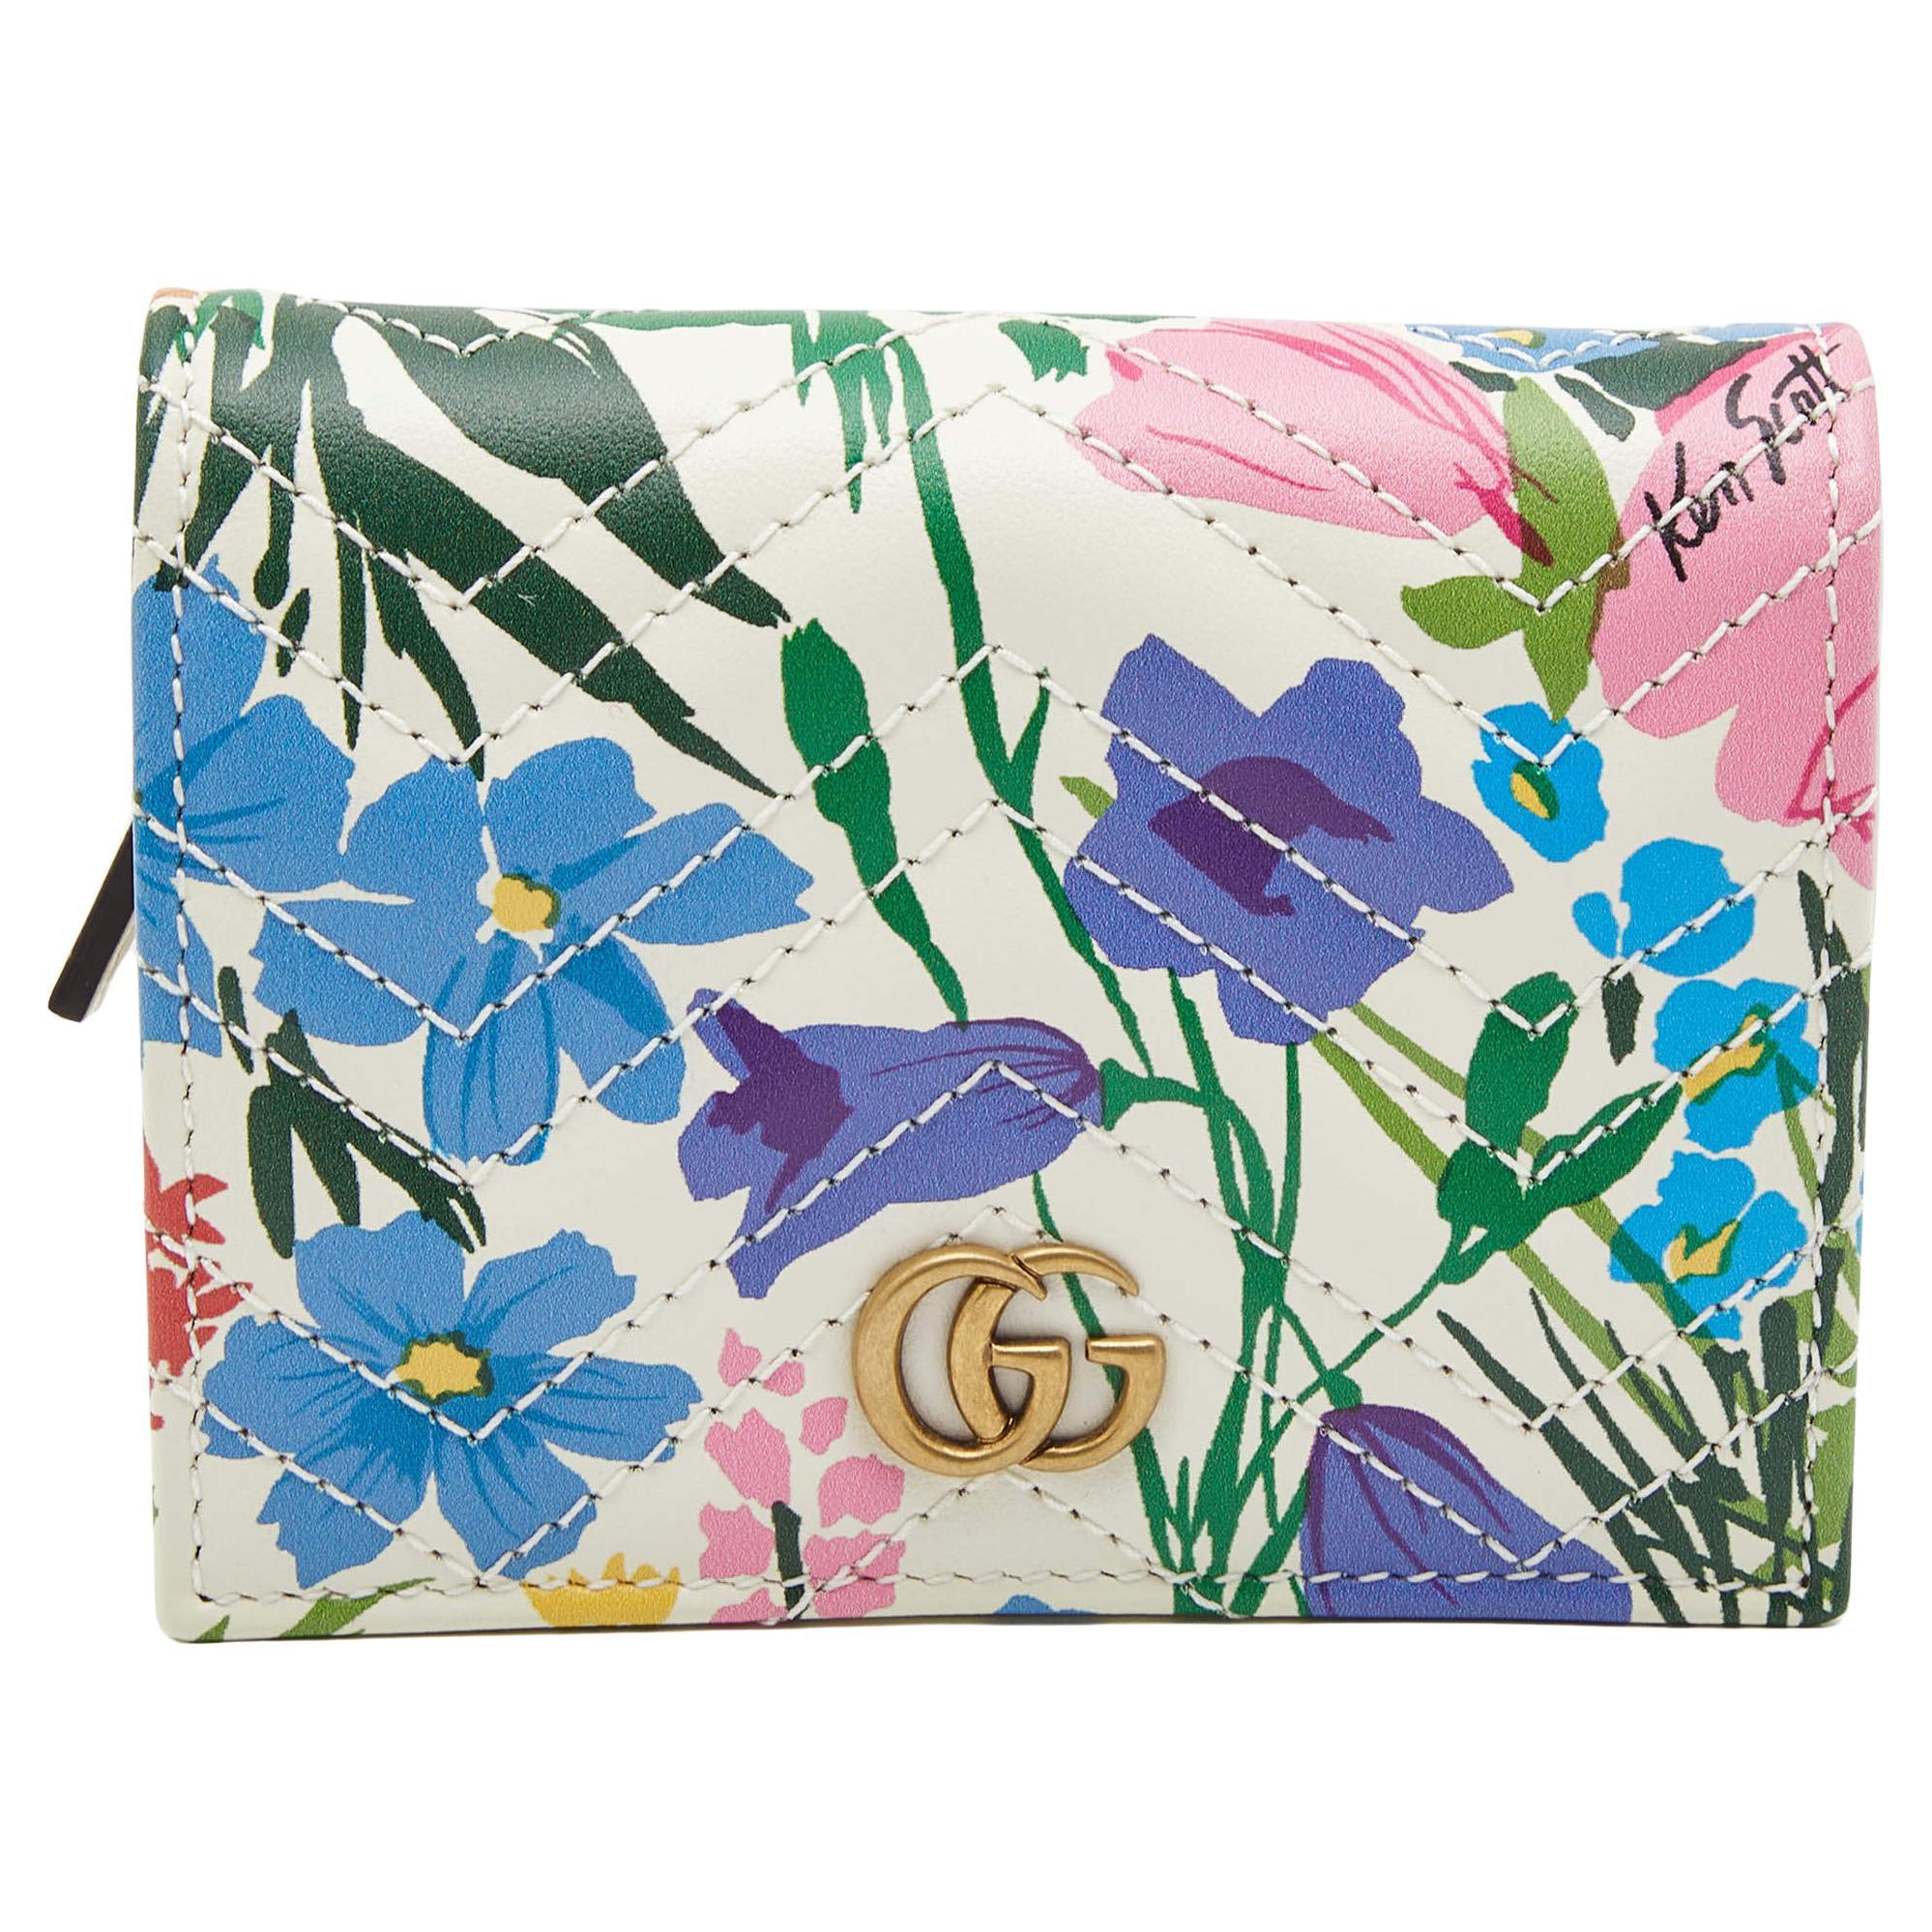 Gucci x Ken Scott Multicolor Floral Print Leather GG Marmont Card Case